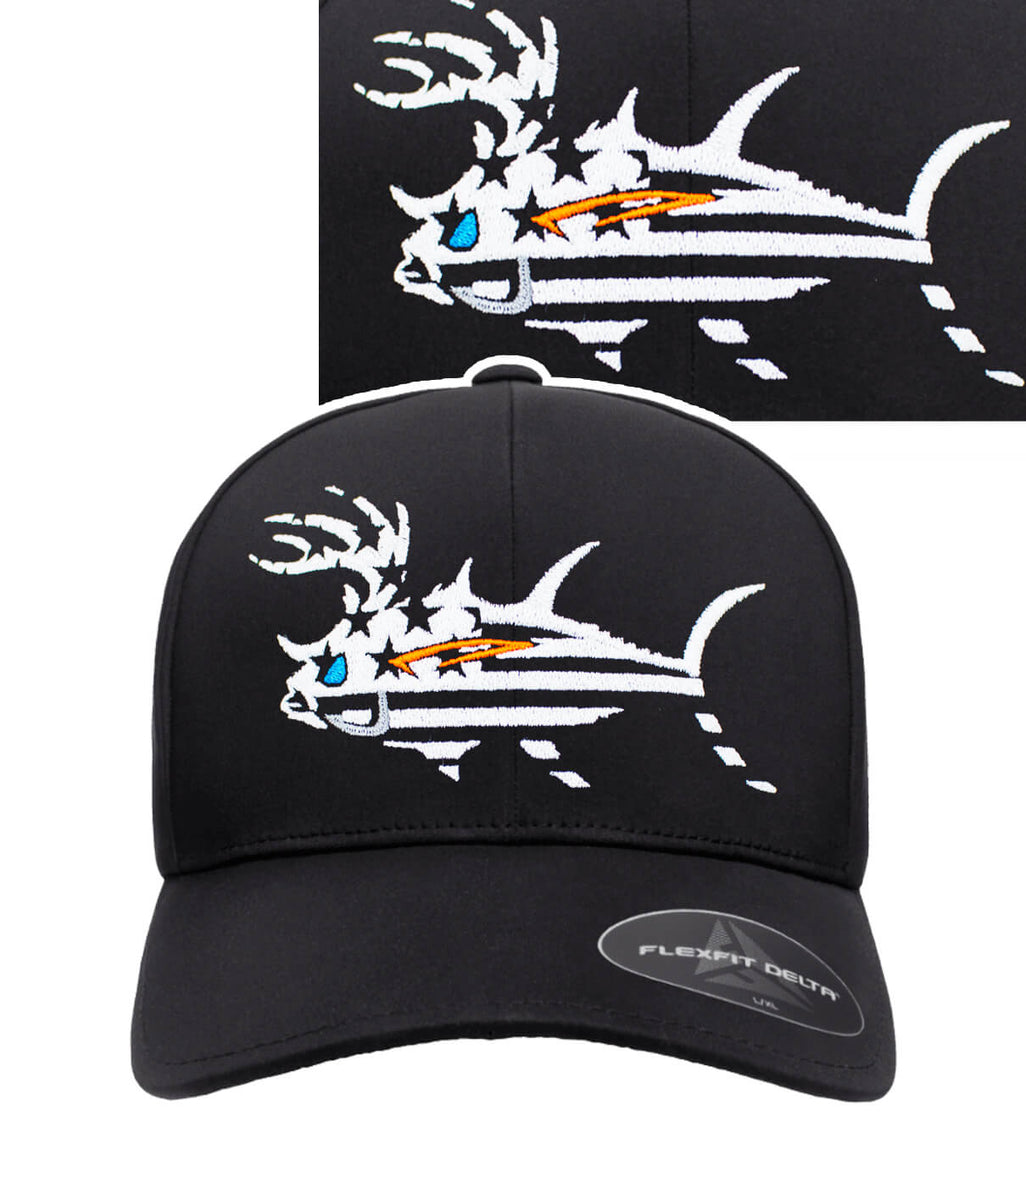 NICERIDE | Baseball Trucker Hats Caps & Flexfit Buck-Eye